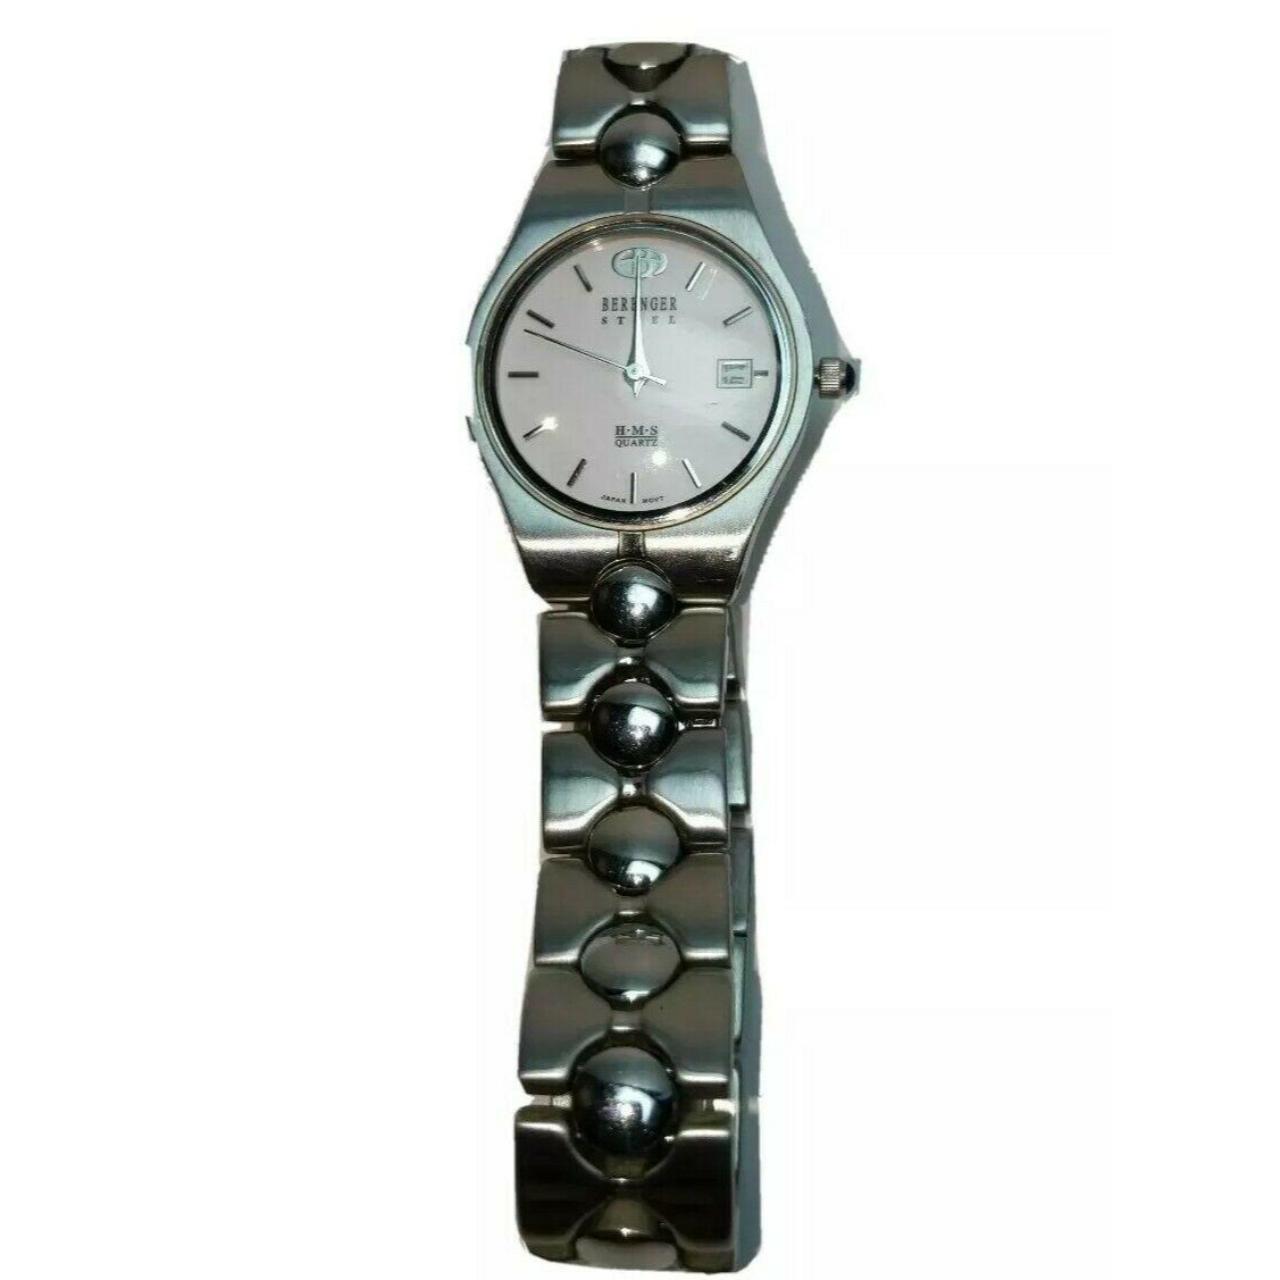 Sold at Auction: Modern Men's Wrist Watch from Berenger